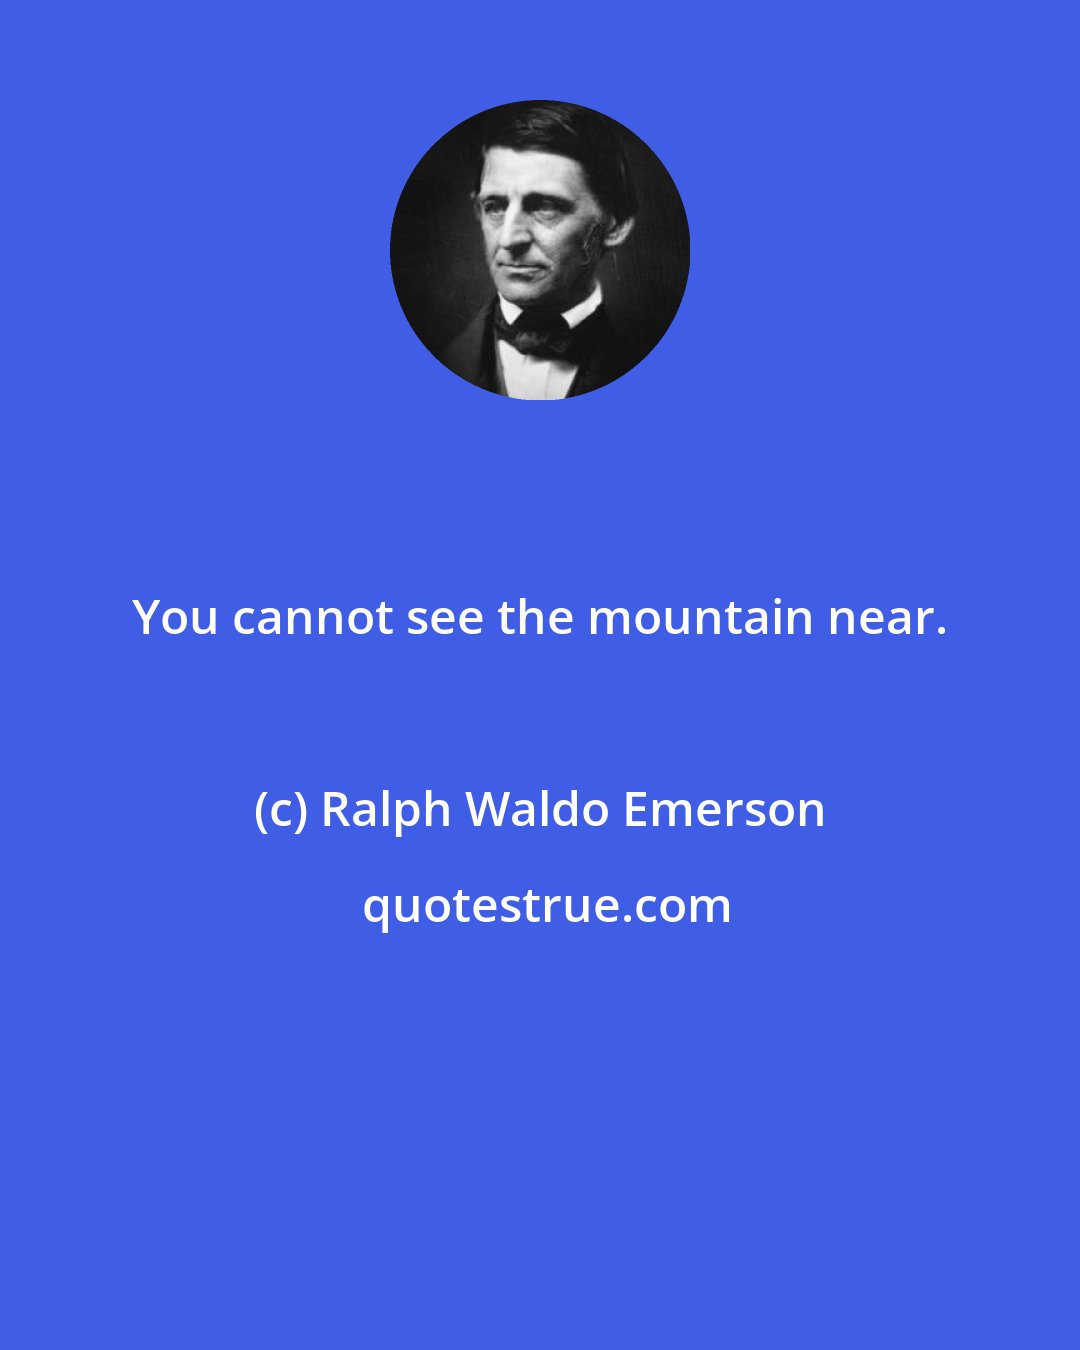 Ralph Waldo Emerson: You cannot see the mountain near.